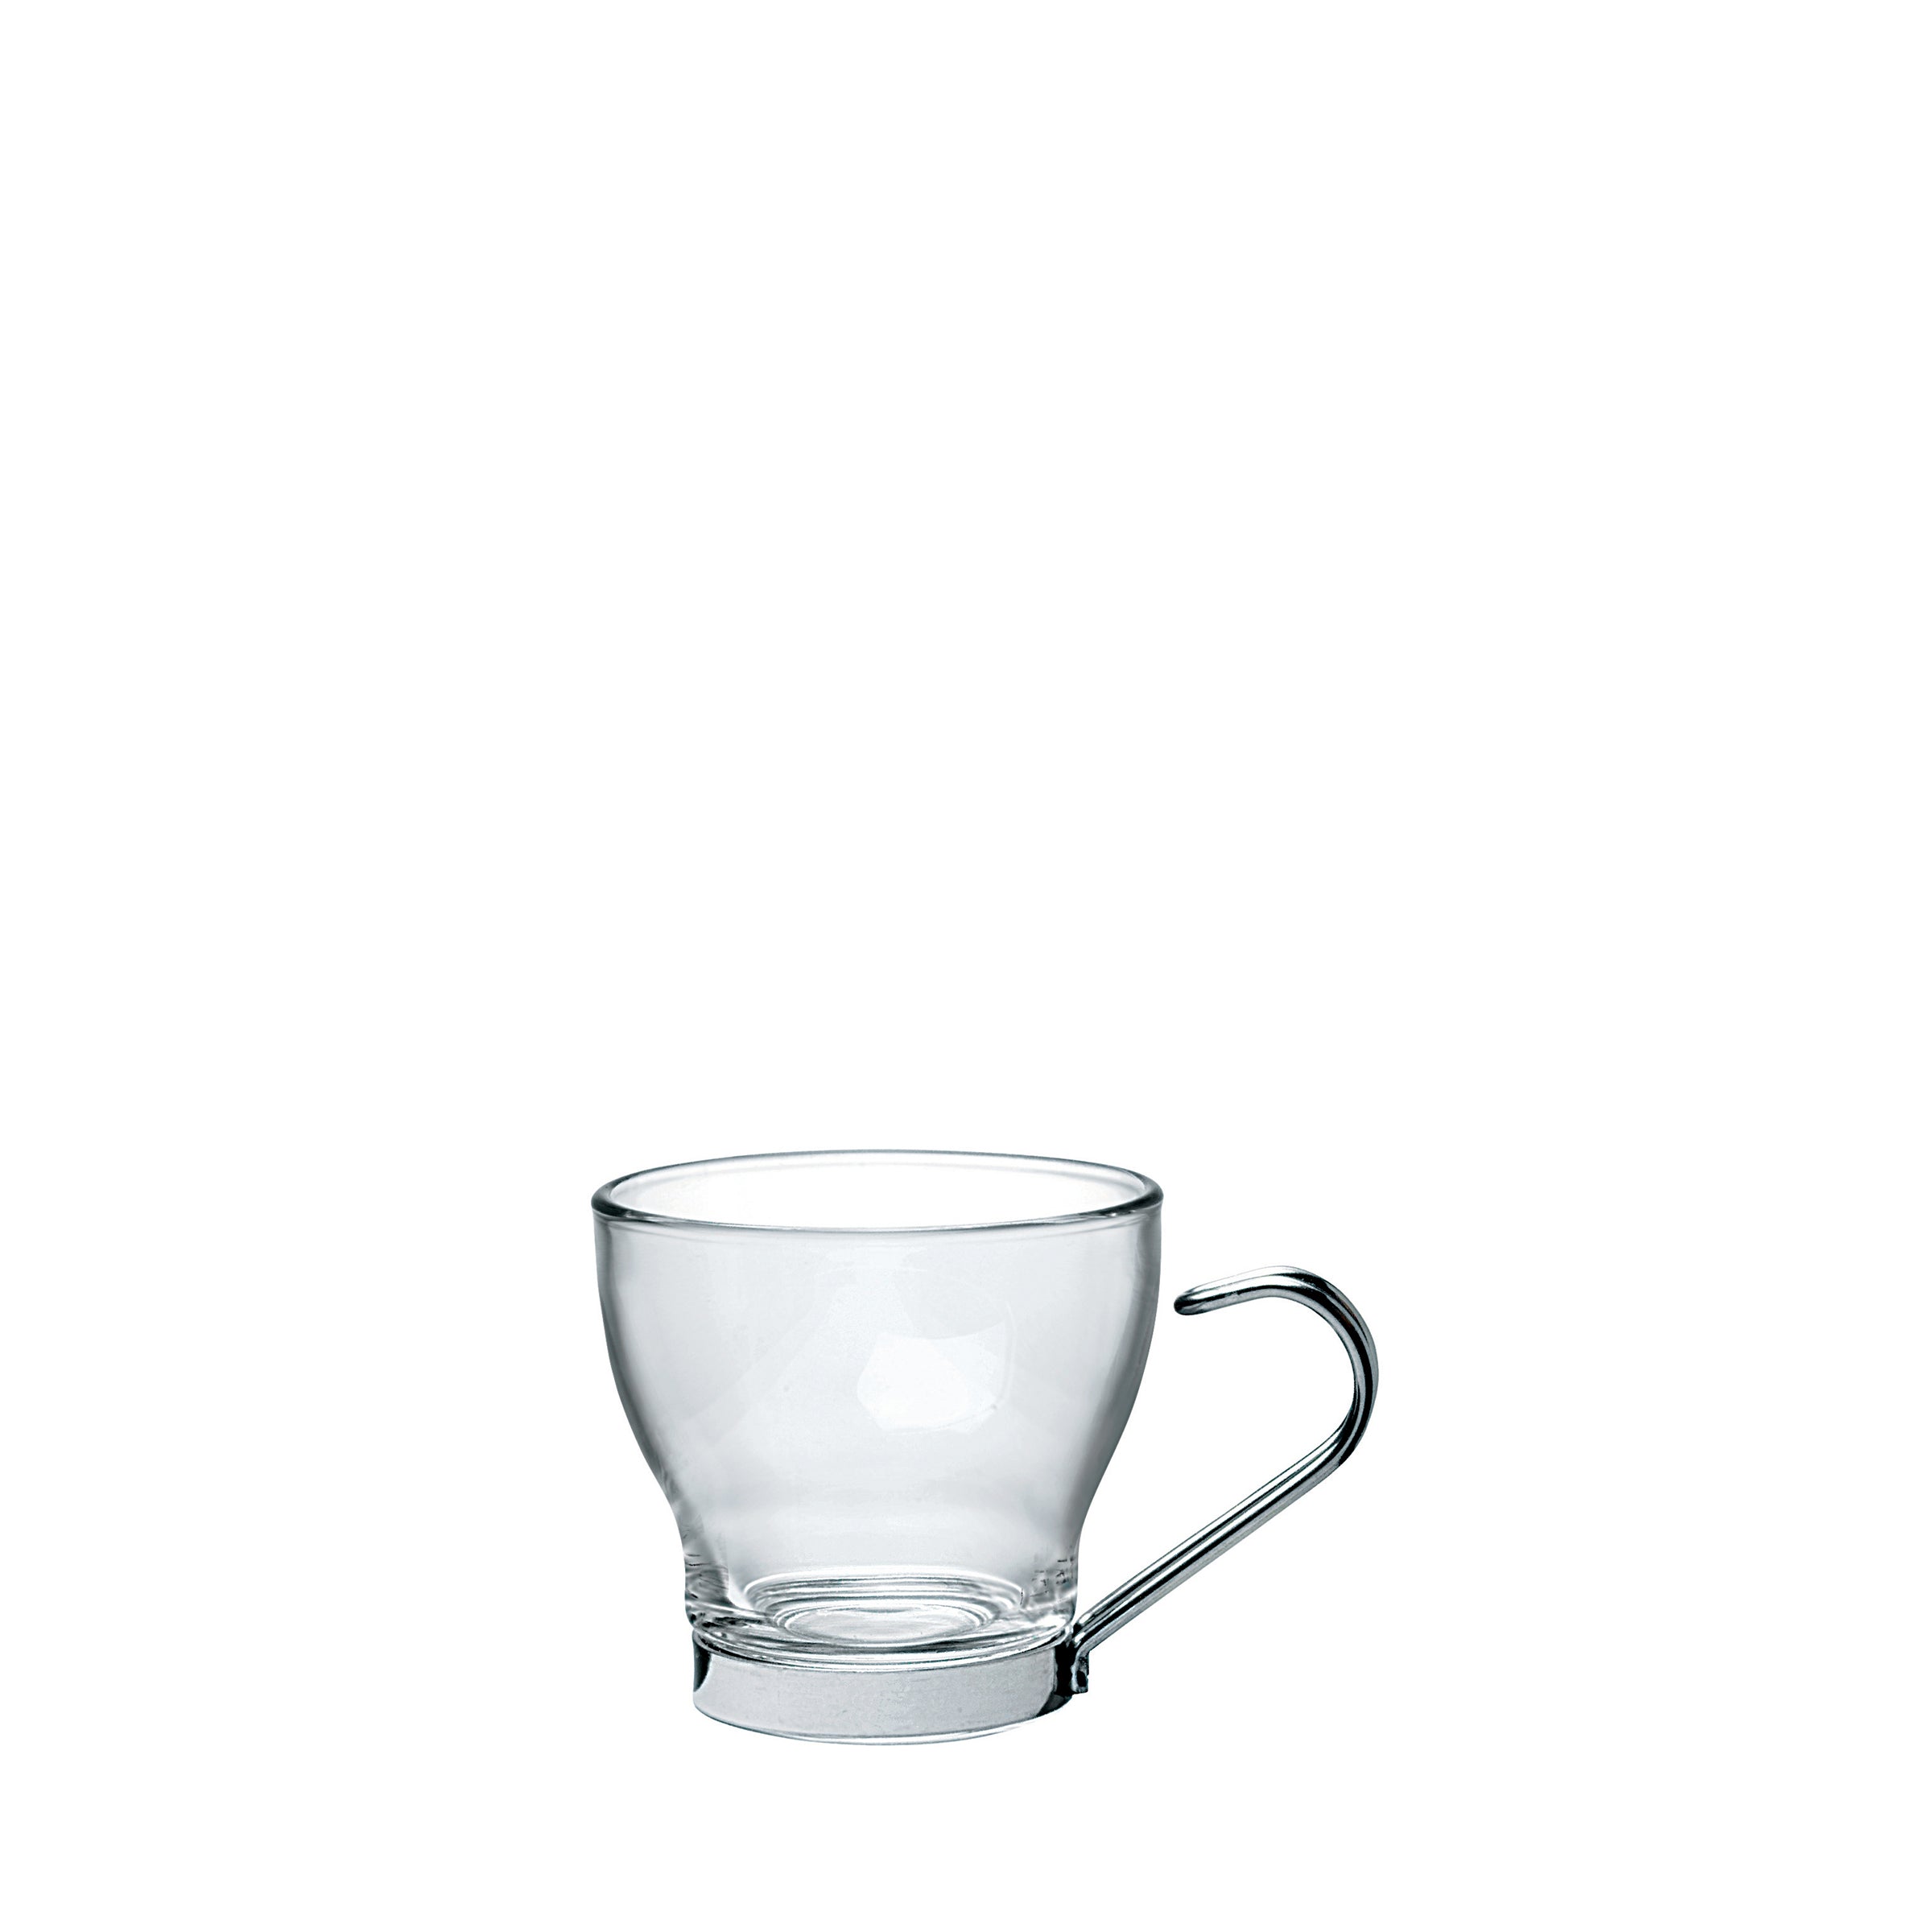 Frabosk 911214 Glass Espresso Cup & Stainless Saucer - 3 fl oz, flat  handle, set of 2